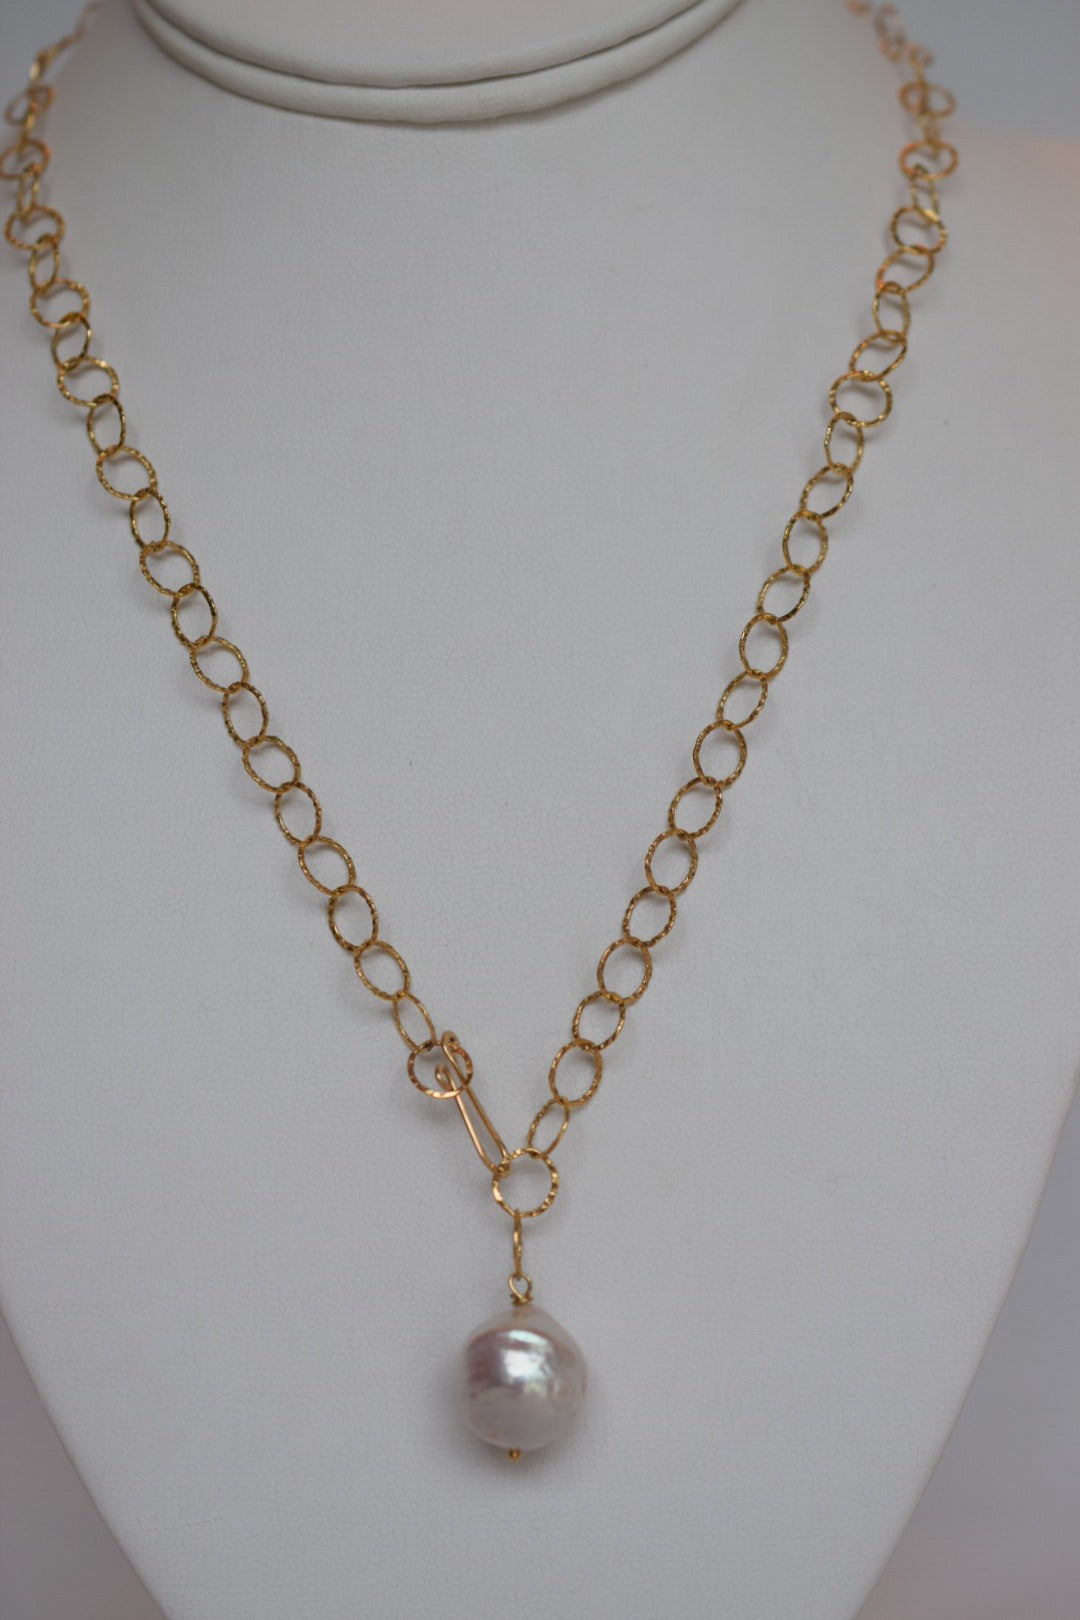 Baroque Saltwater Pearl Necklace ~ Parisian Inspired, 14k GF - MILK VELVET PEARLS